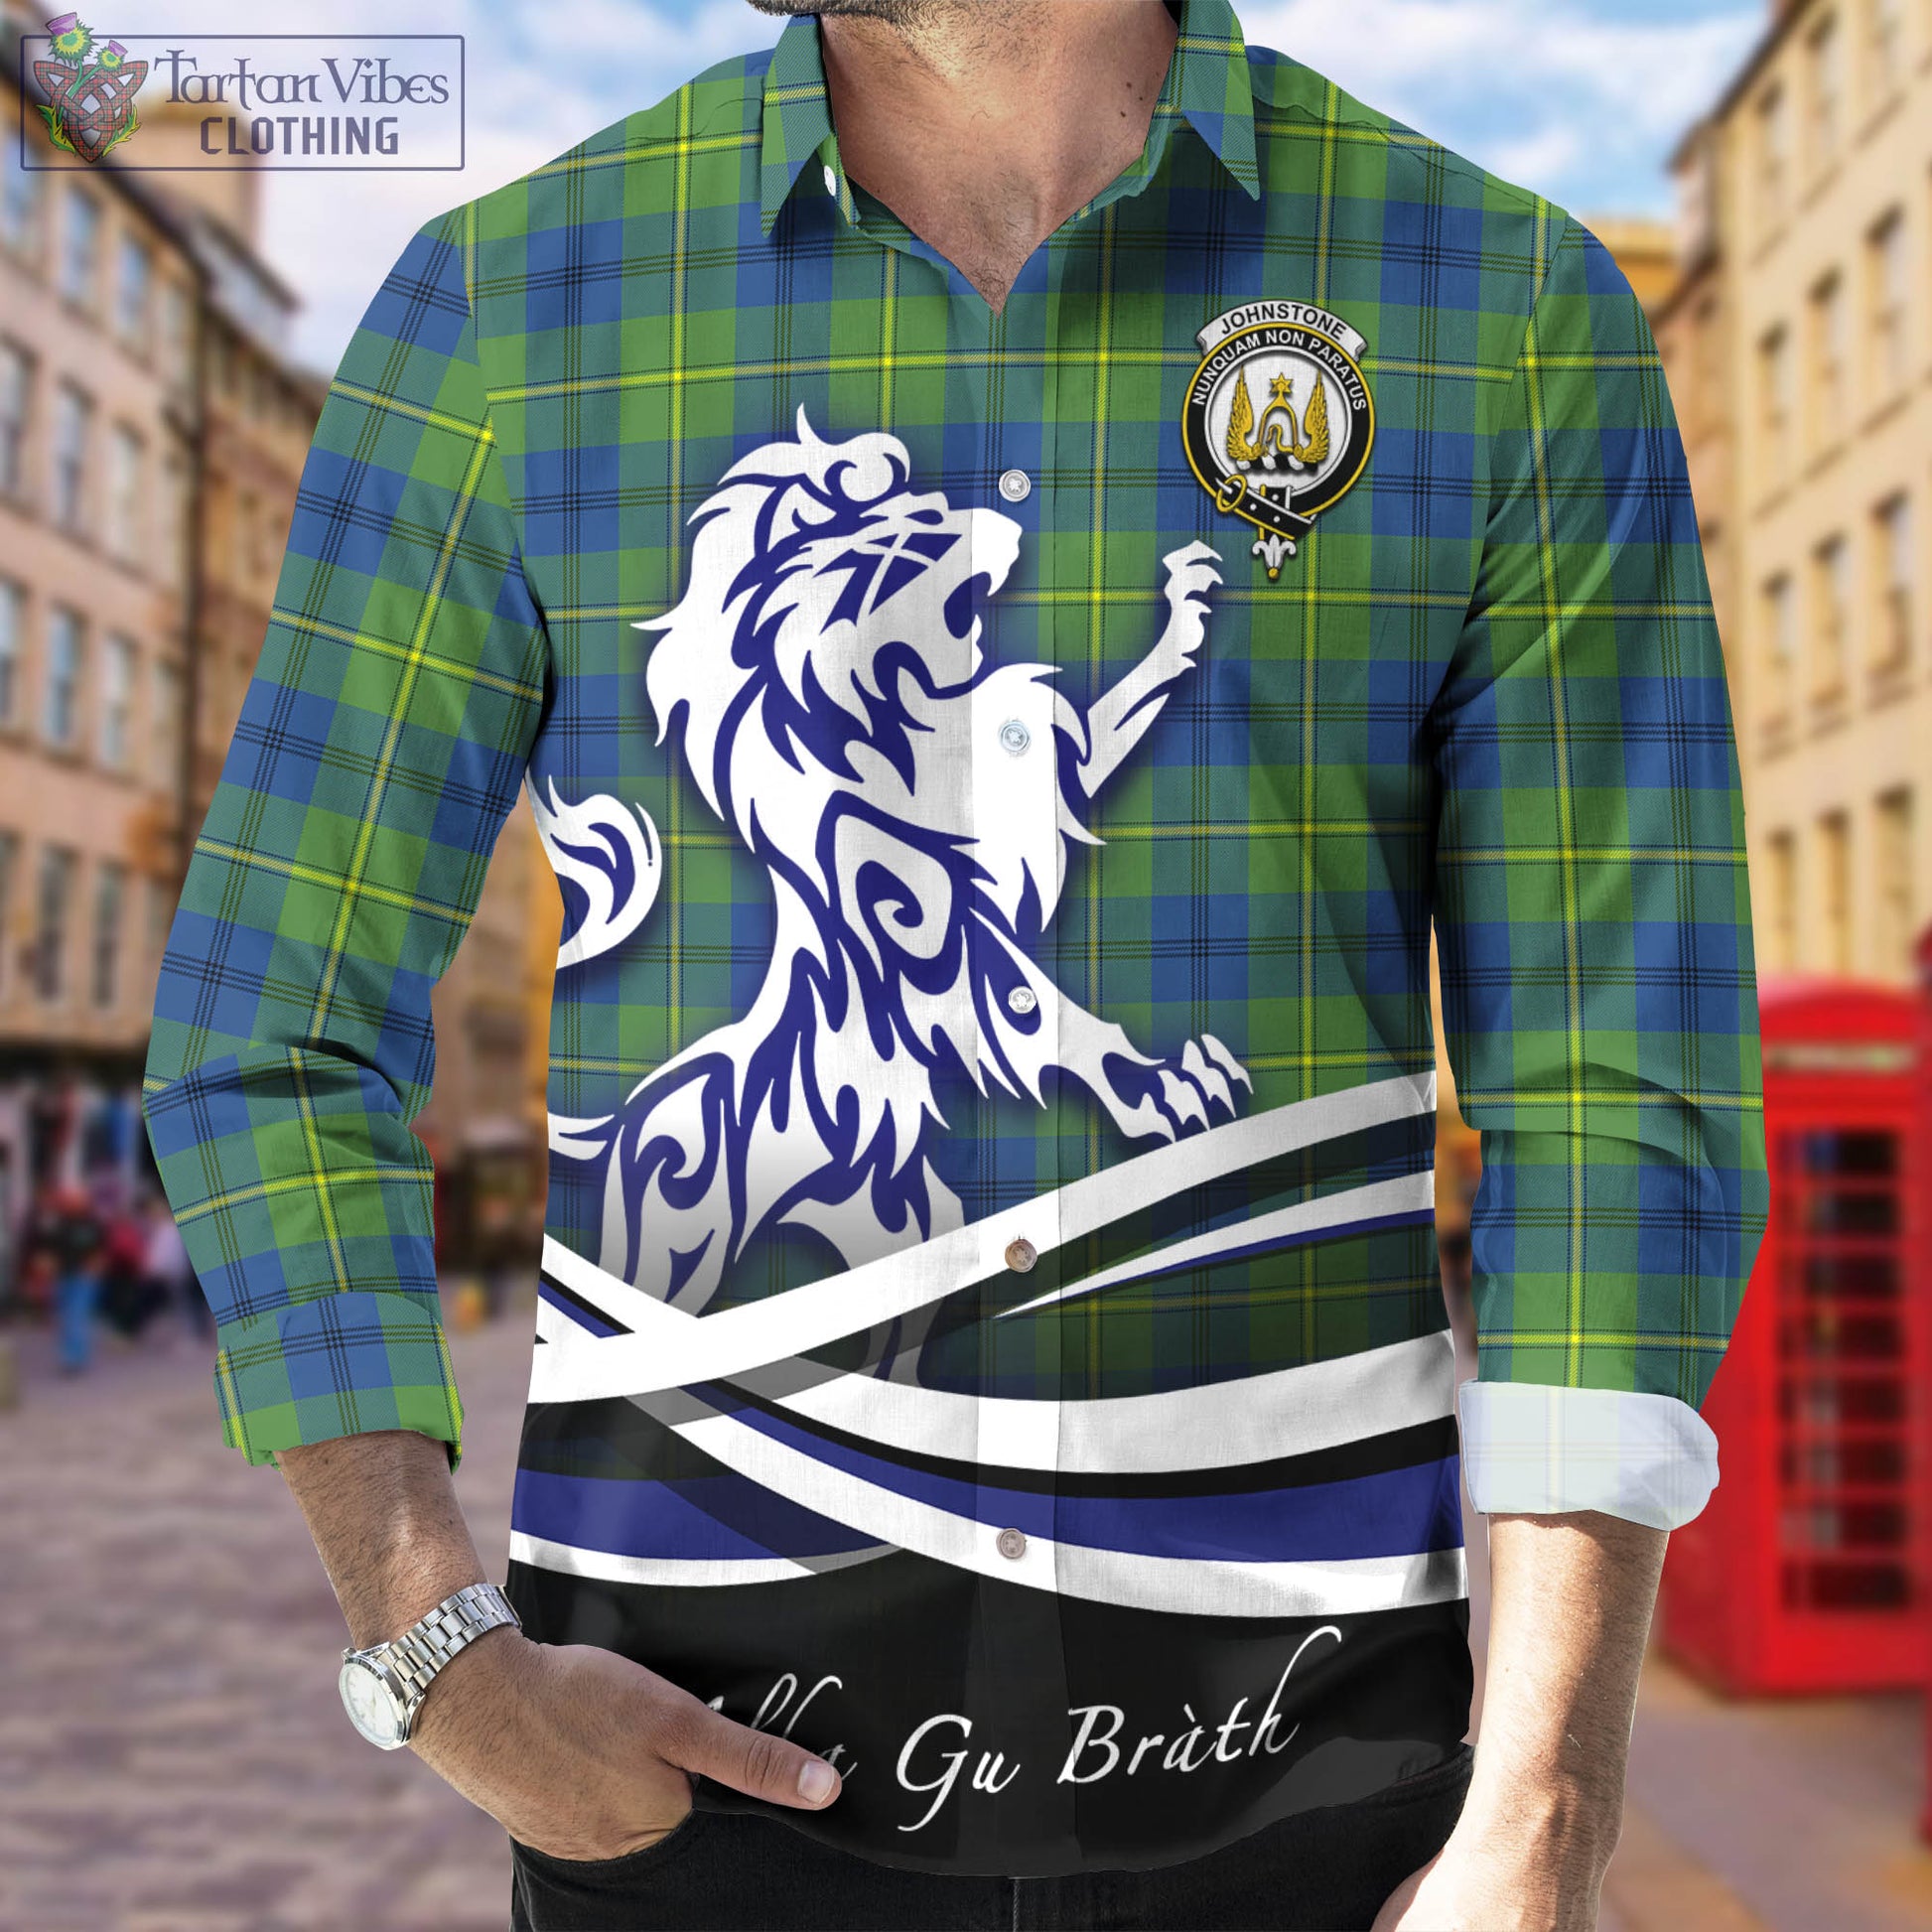 johnstone-johnston-ancient-tartan-long-sleeve-button-up-shirt-with-alba-gu-brath-regal-lion-emblem